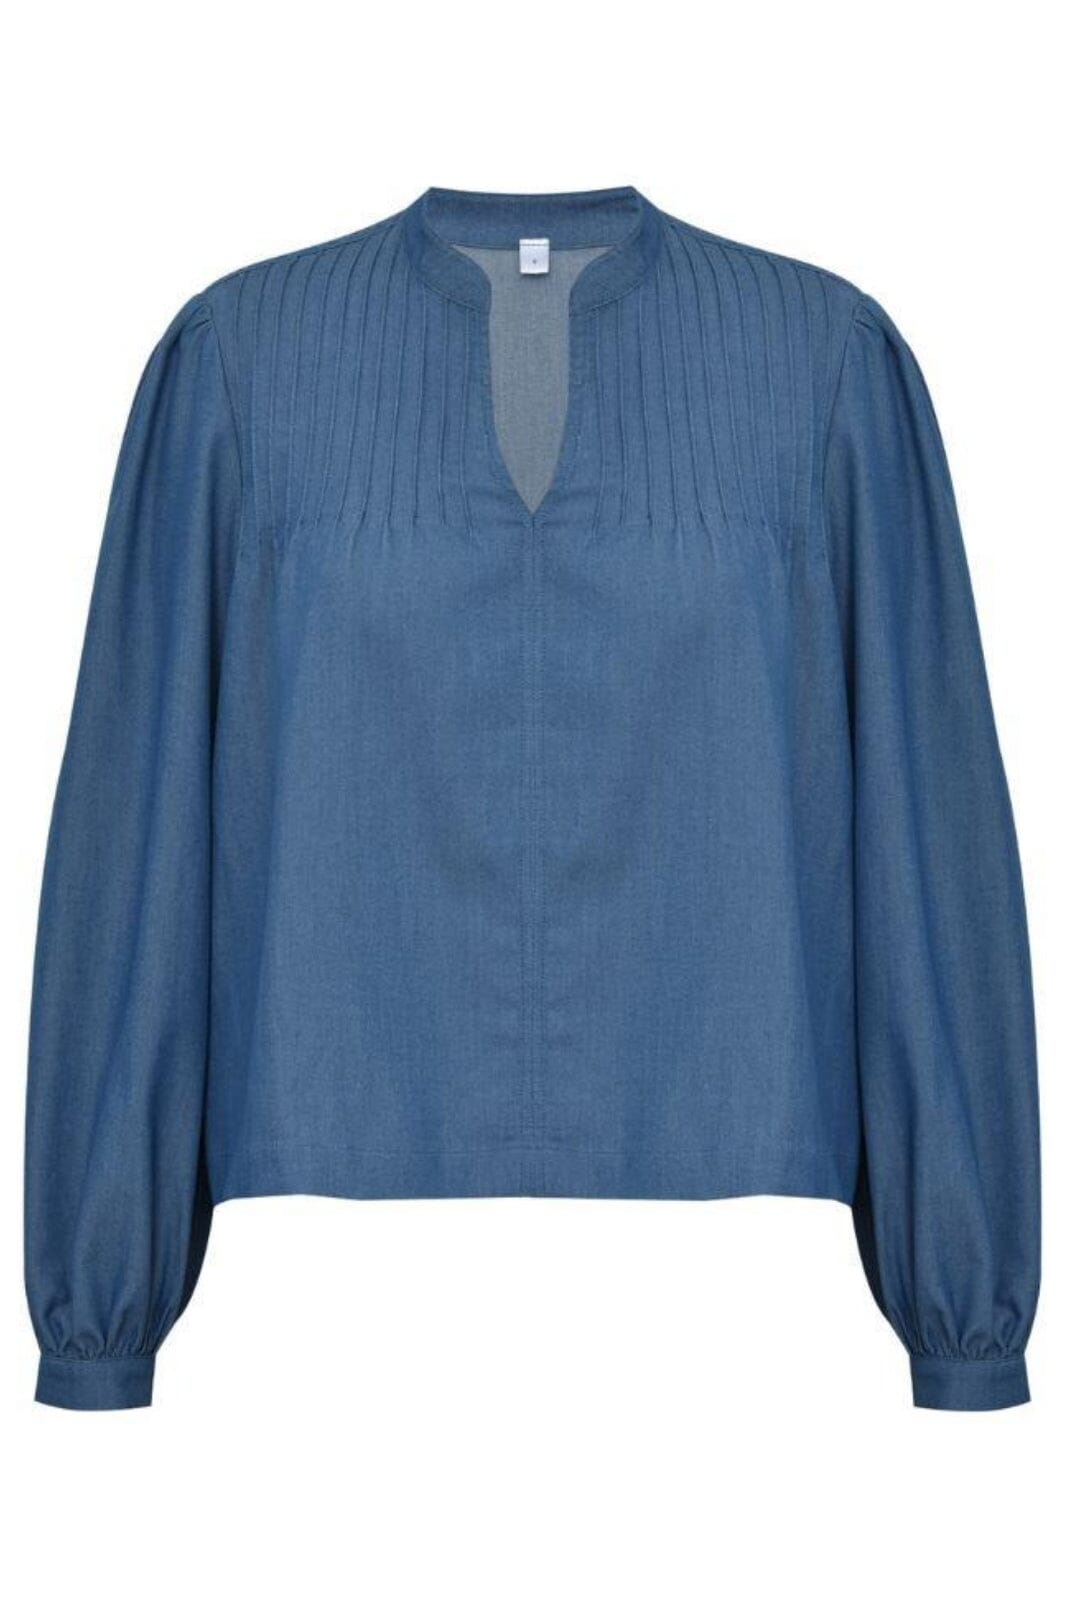 Global Funk - Rainanea-G - 926 Medium Blue Skjorter 